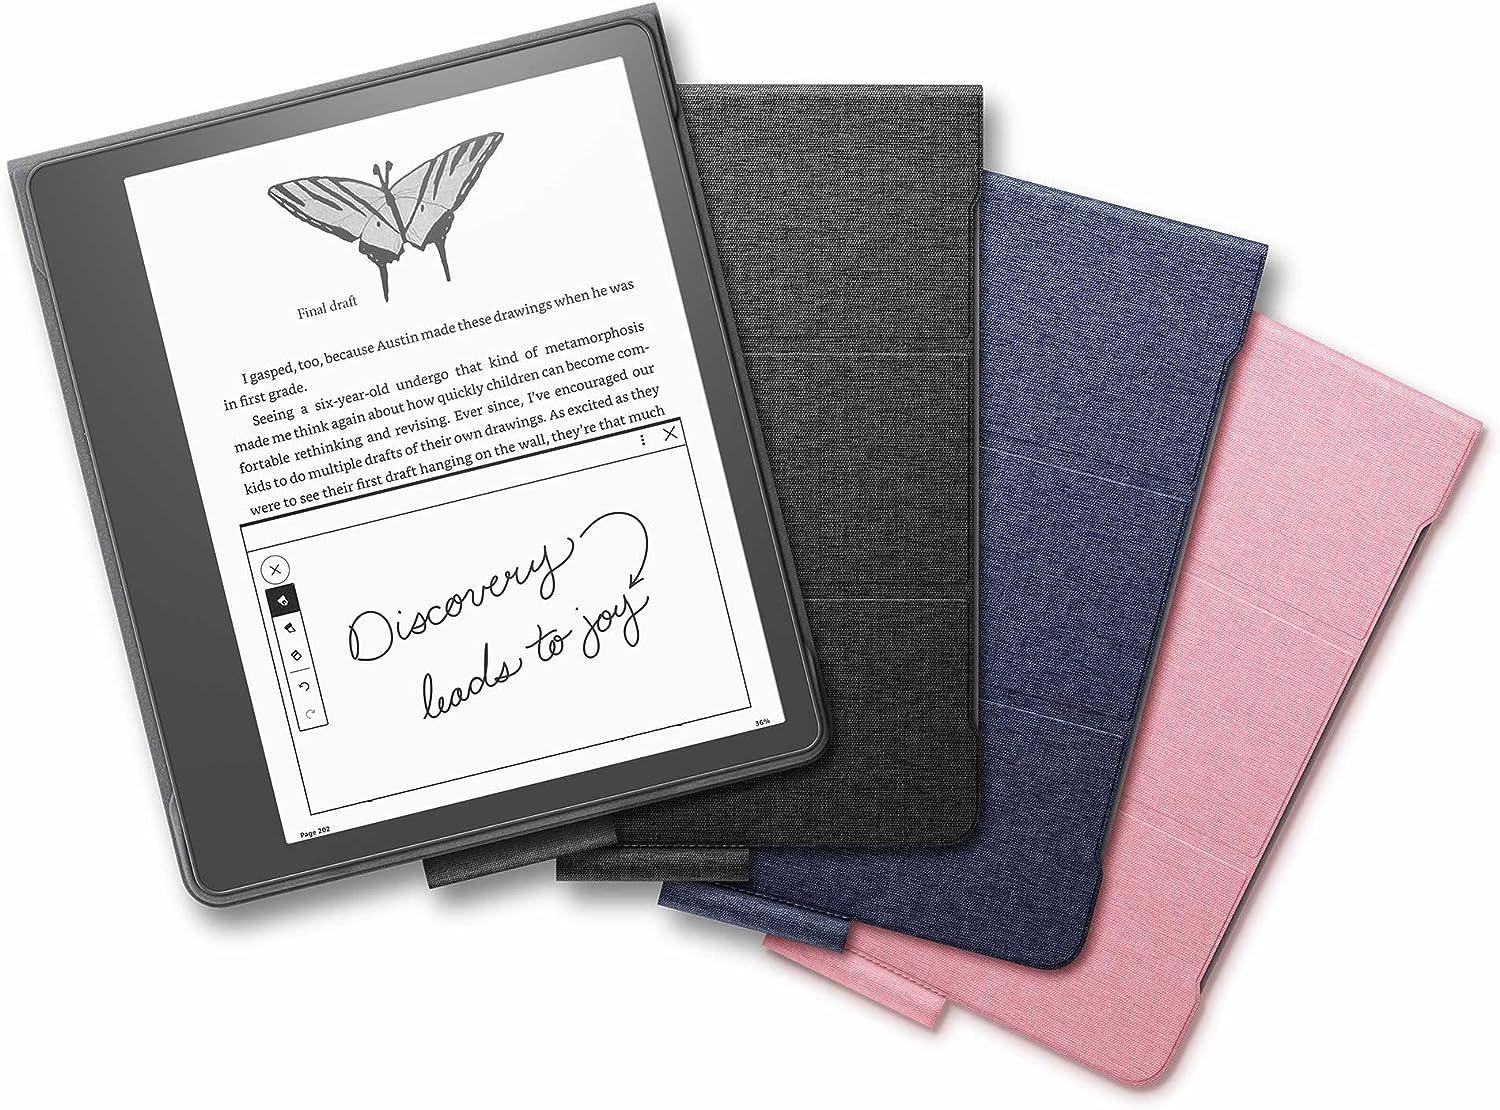 Kindle Paperwhite Screen Protector + Black Carbon Fiber skin Pr